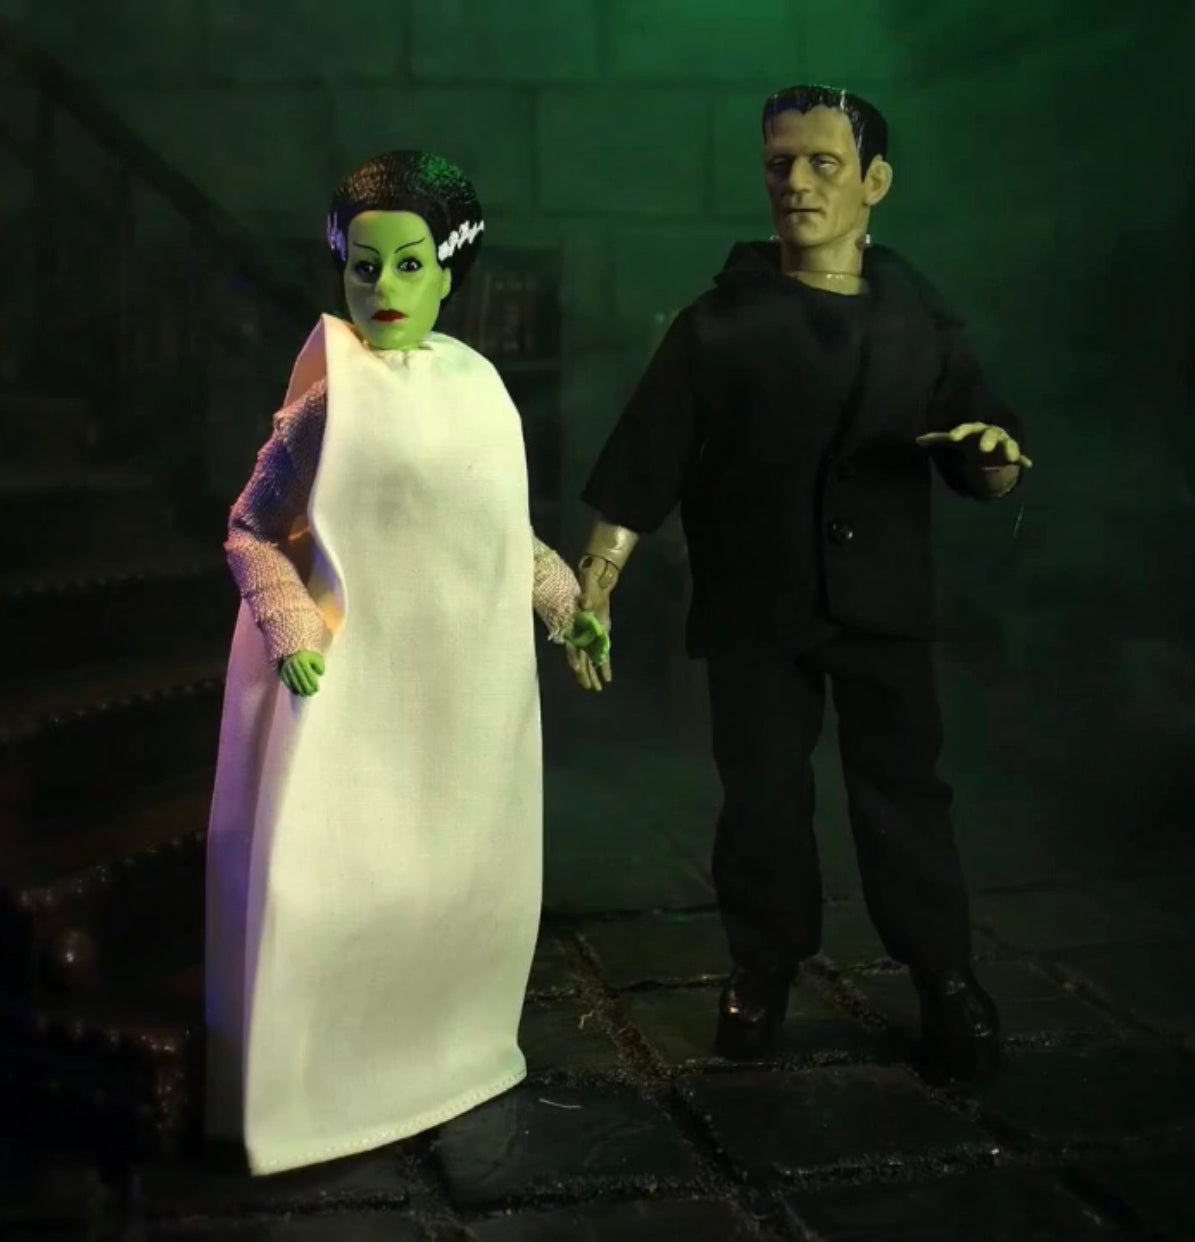 Mego Horror Wave 11 - Universal Monsters Bride of Frankenstein 8" Action Figure - Zlc Collectibles